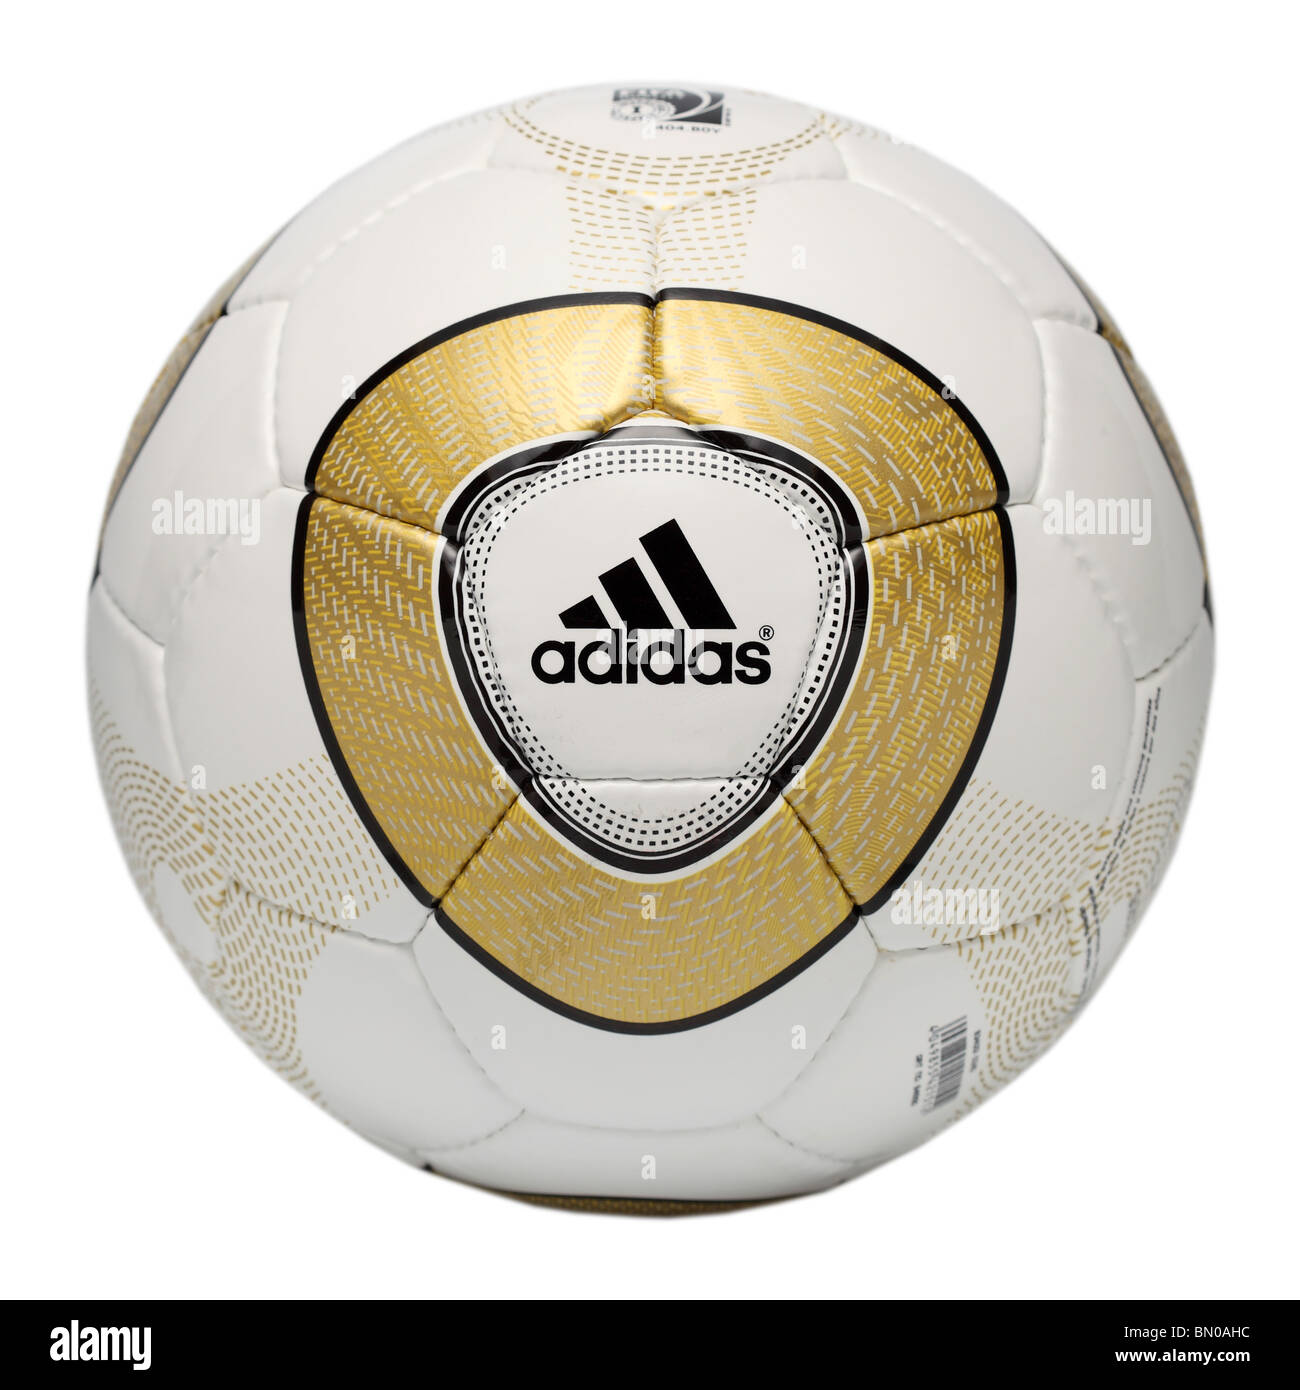 Adidas Jo'Buljani replique ballon replica coupe du monde FIFA 2010 Afrique  du Sud Photo Stock - Alamy